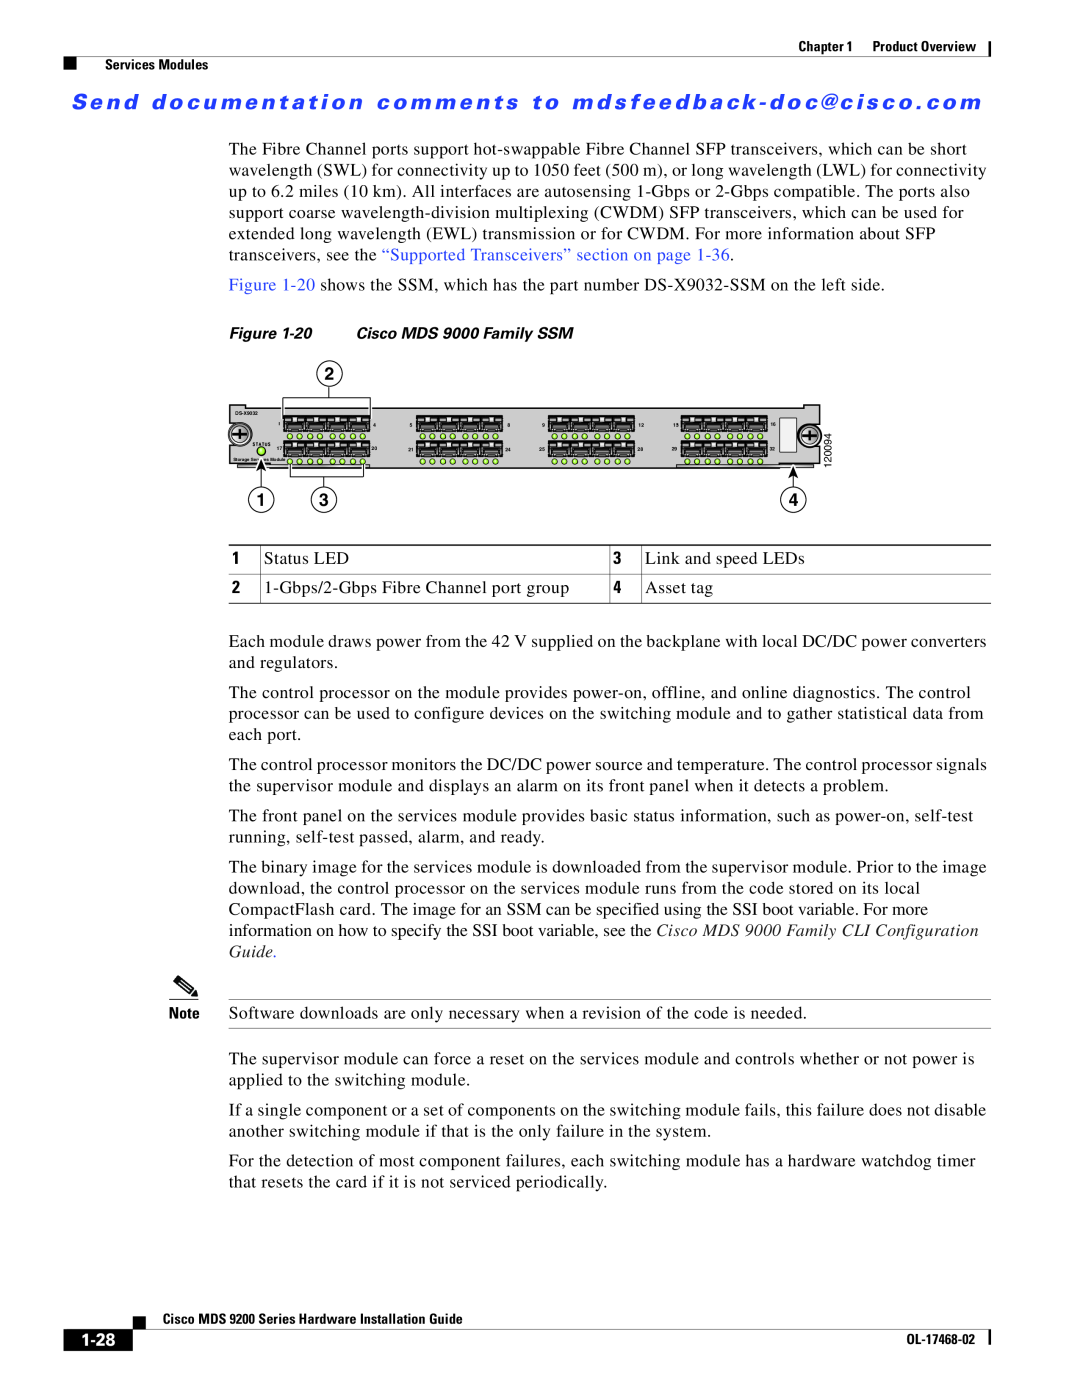 Cisco Systems MDS 9200 Series manual 1-28, 20 Cisco MDS 9000 Family SSM, StorageModule 